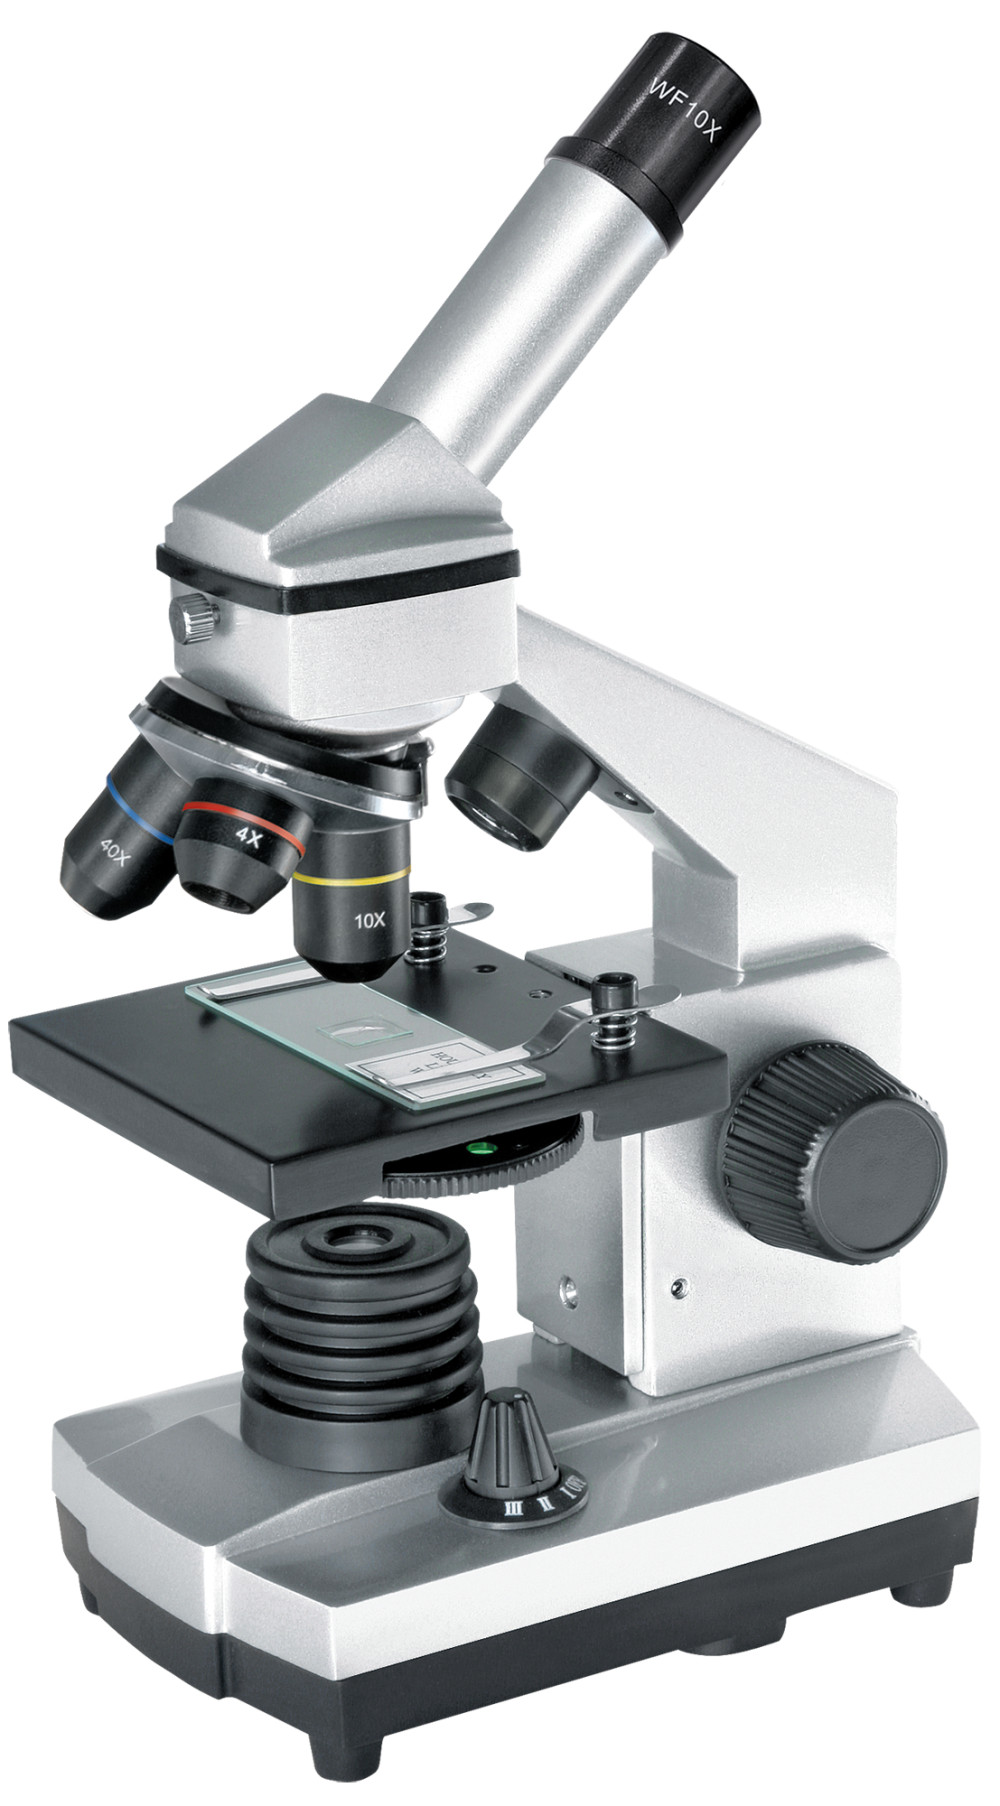 BRESSER JUNIOR Biolux CA 40x-1024x Microscope incl. Smartpho